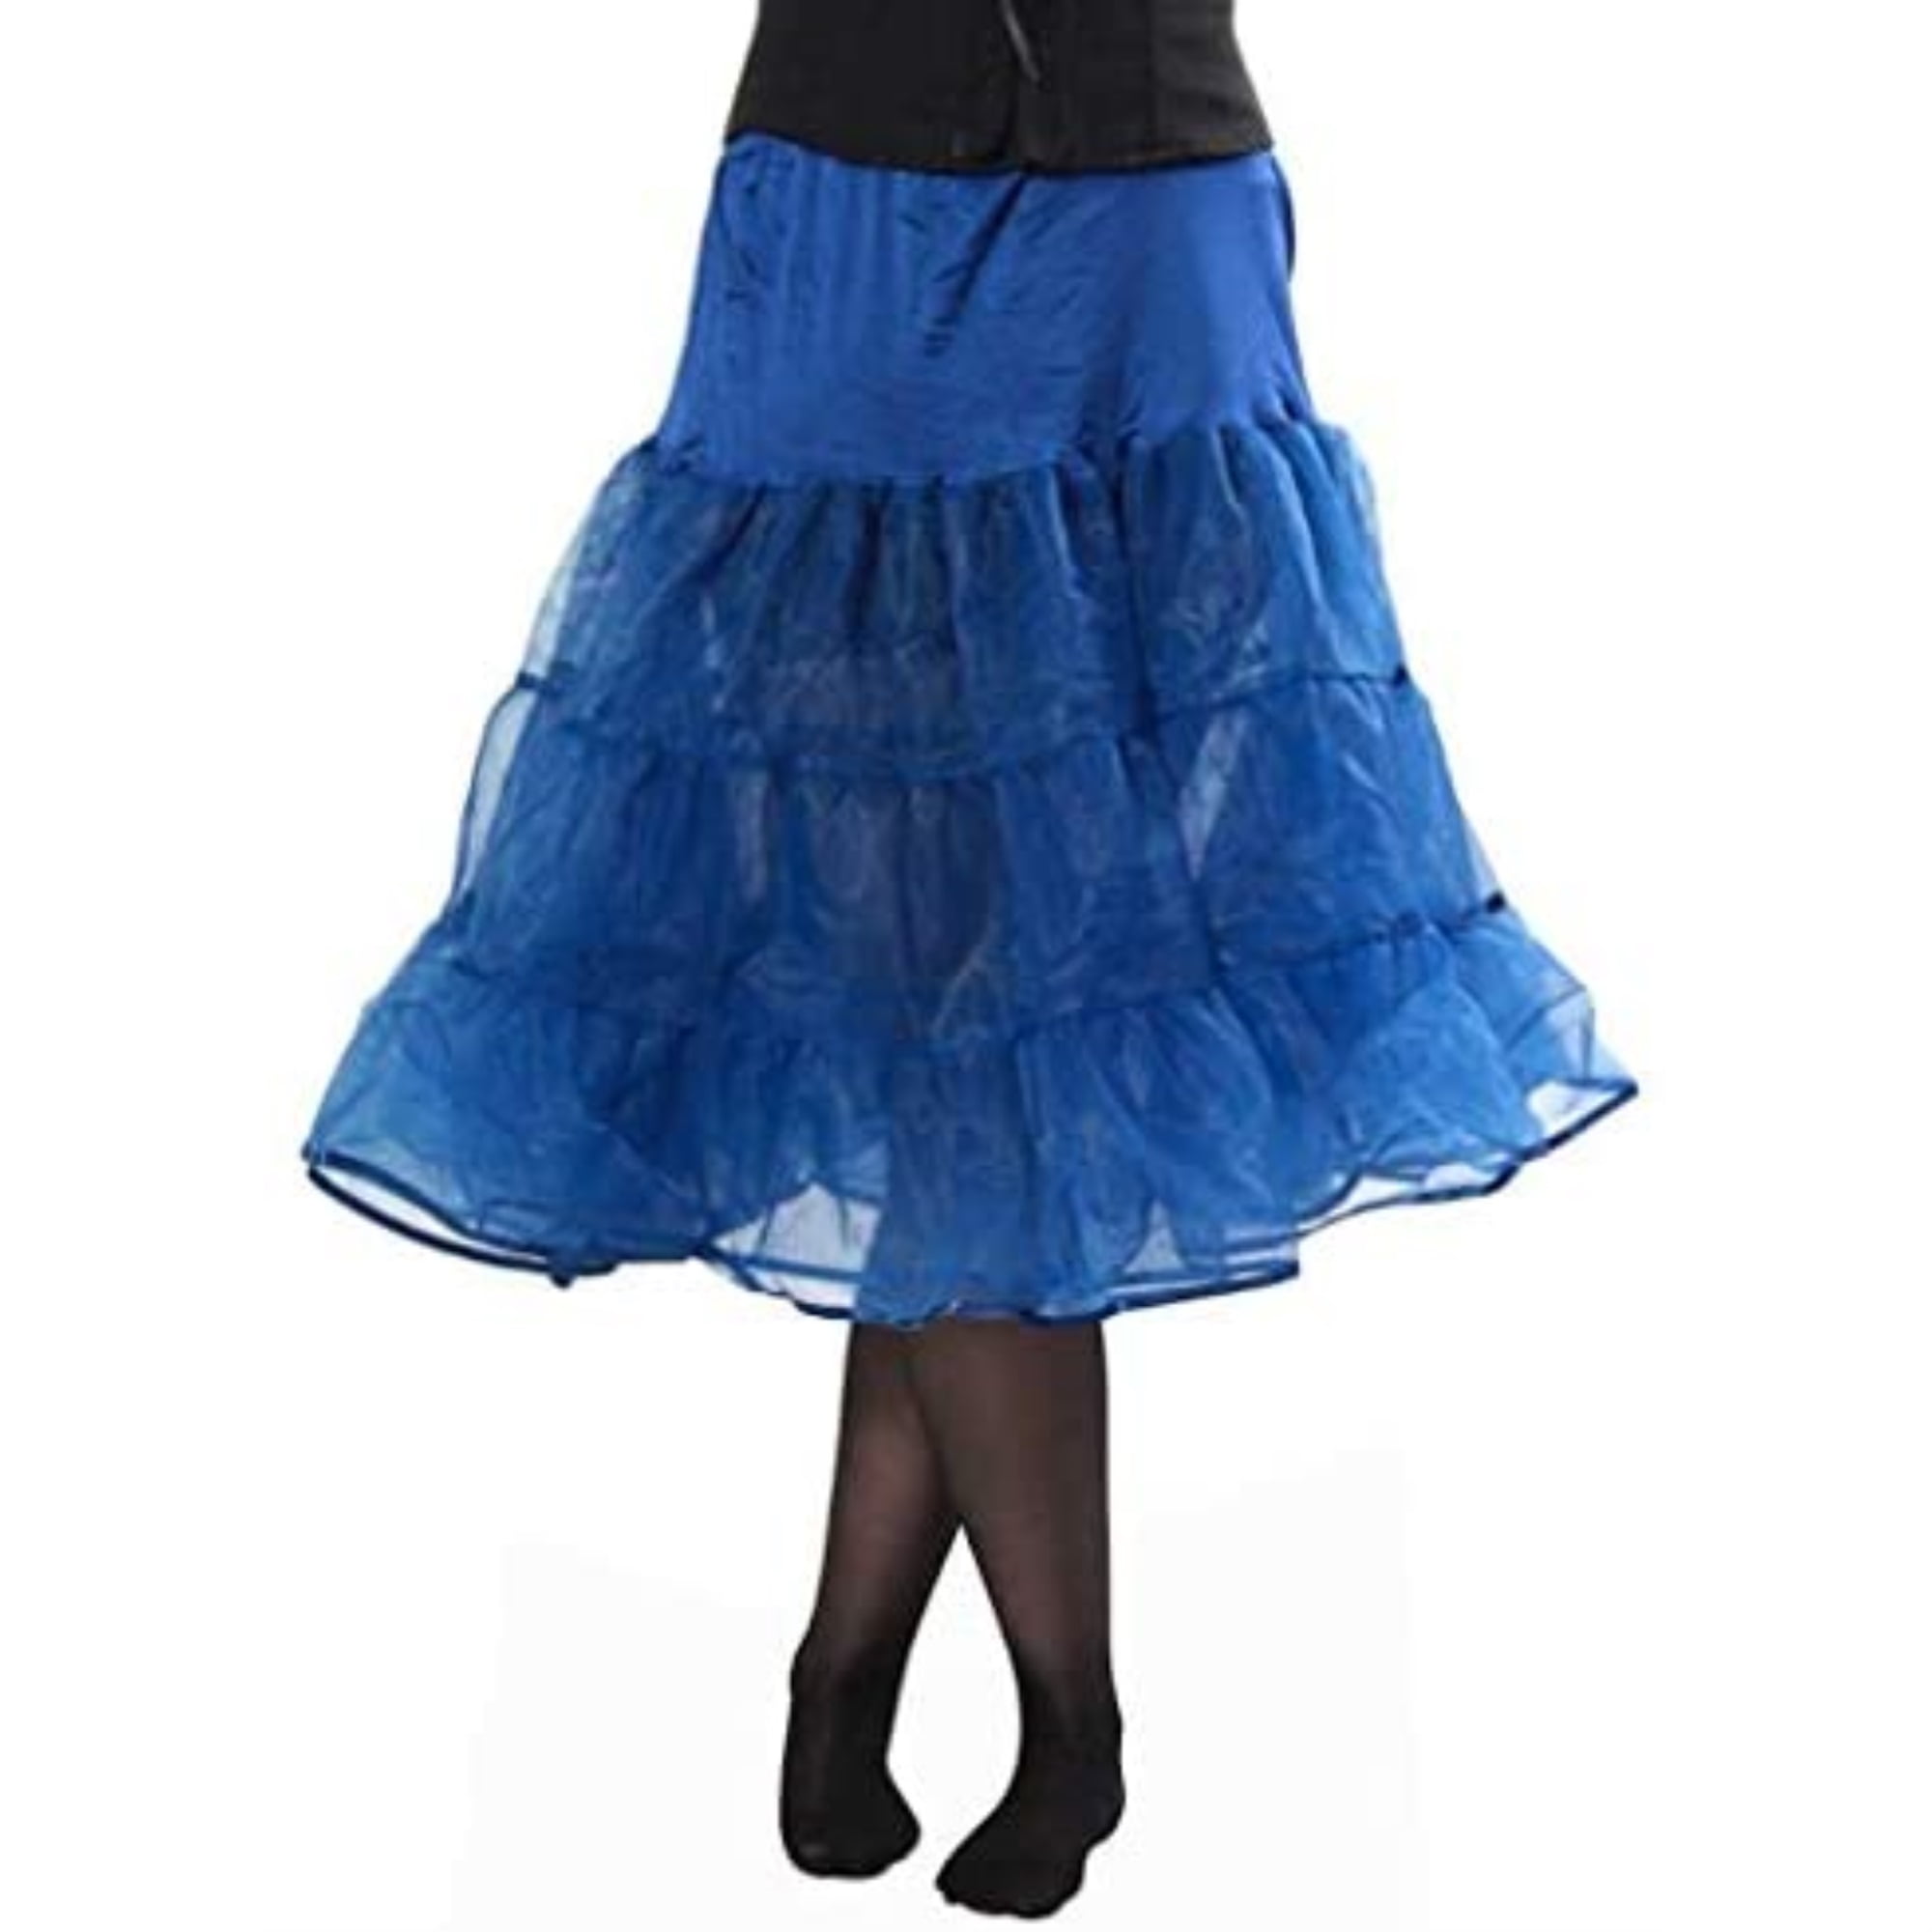 BANNED 50s Rockabilly 20" SUPER SOFT Light Petticoat Under Skirt Dusty Pink 